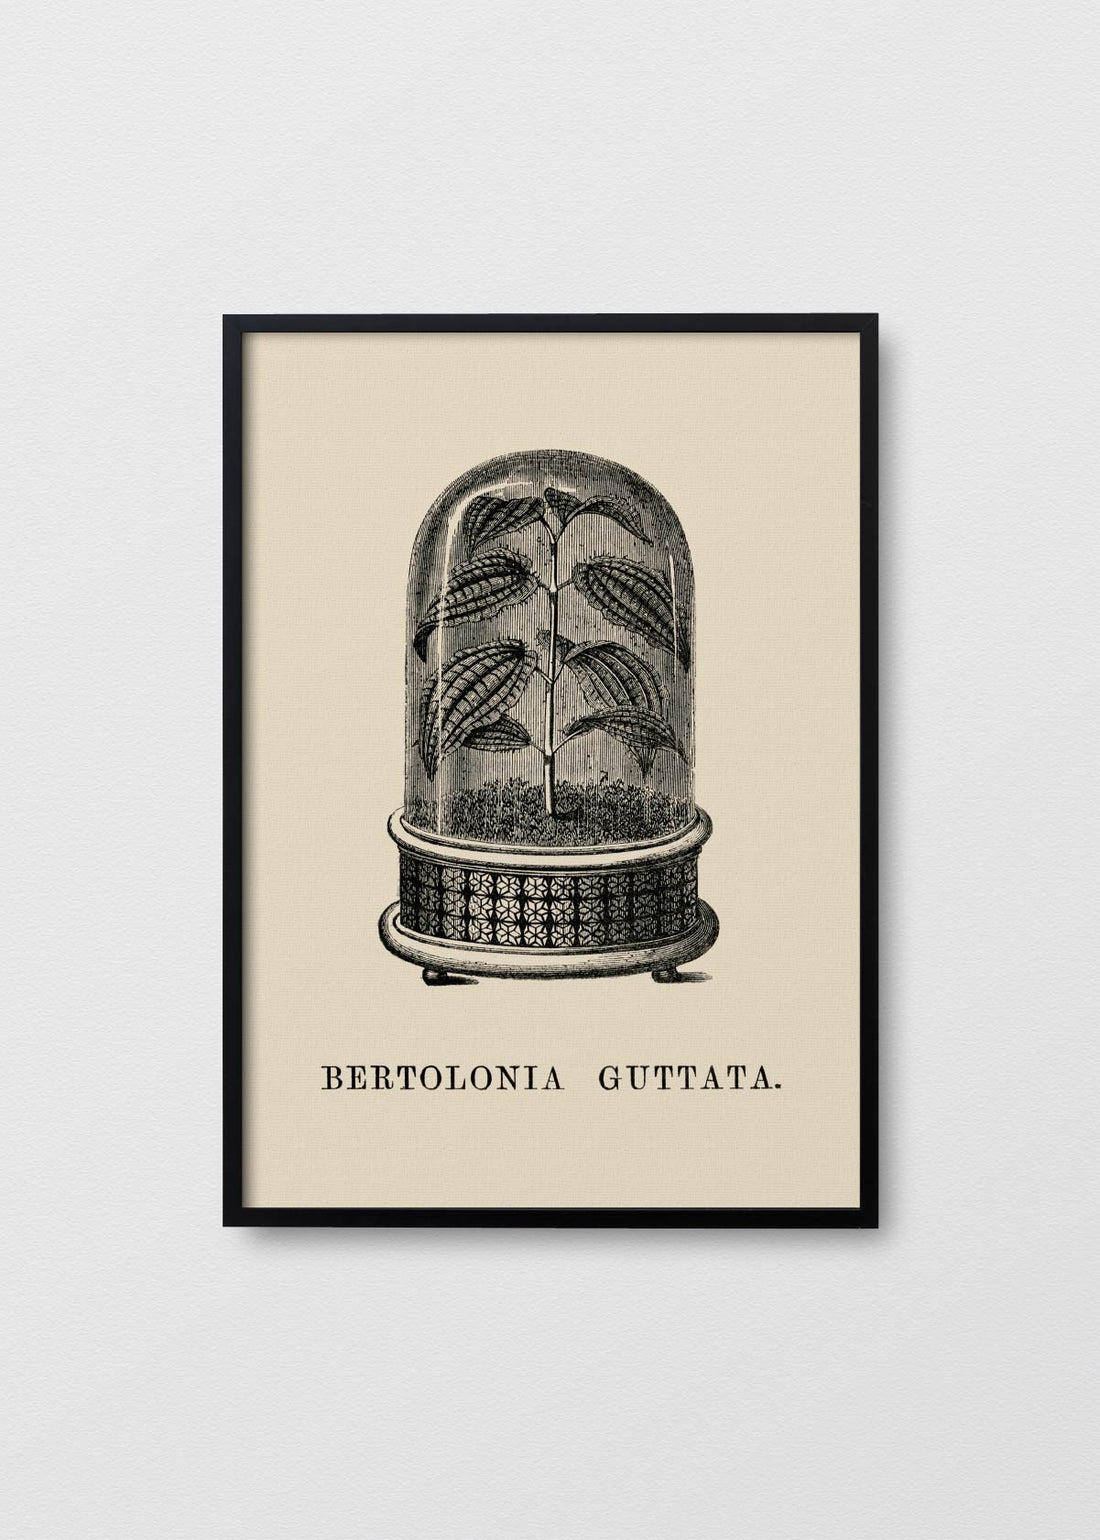 Bertolonia Guttata - Testimoniaprints